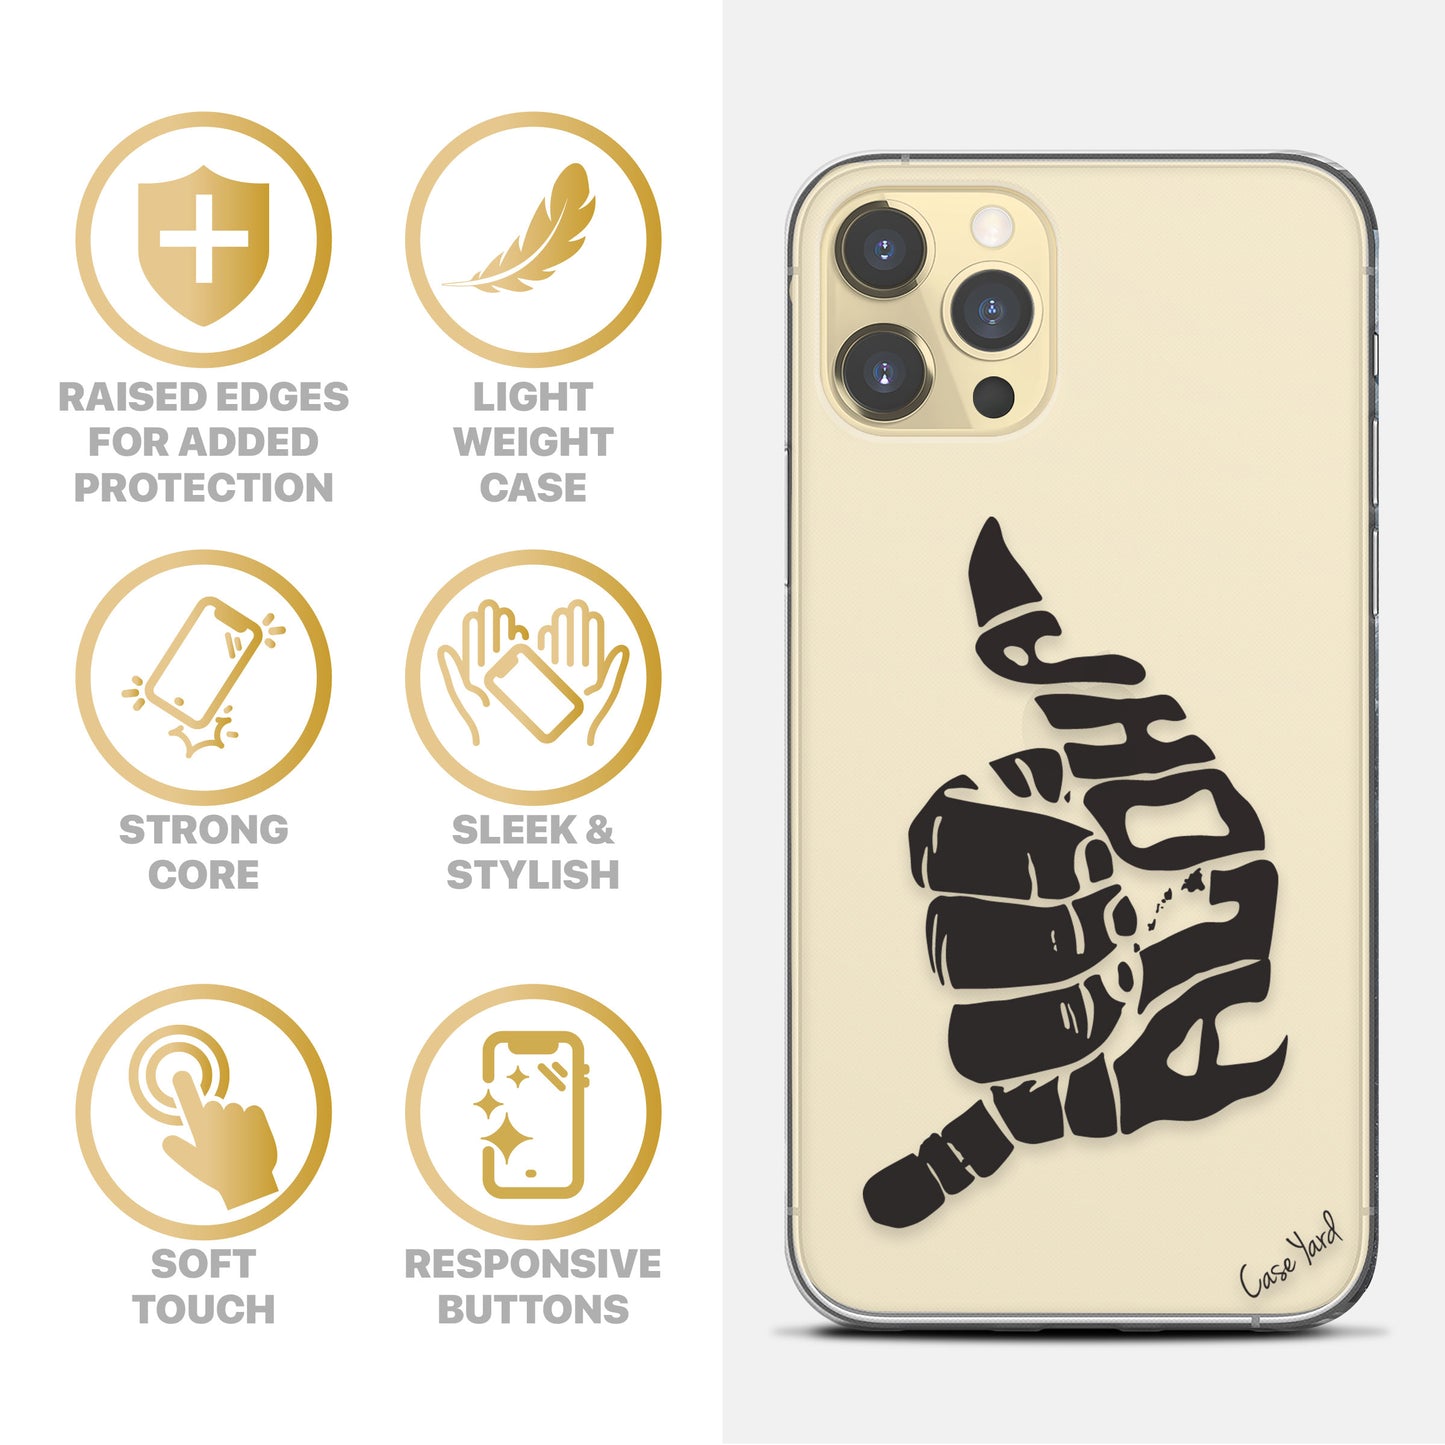 TPU Clear case with (Aloha Shaka) Design for iPhone & Samsung Phones